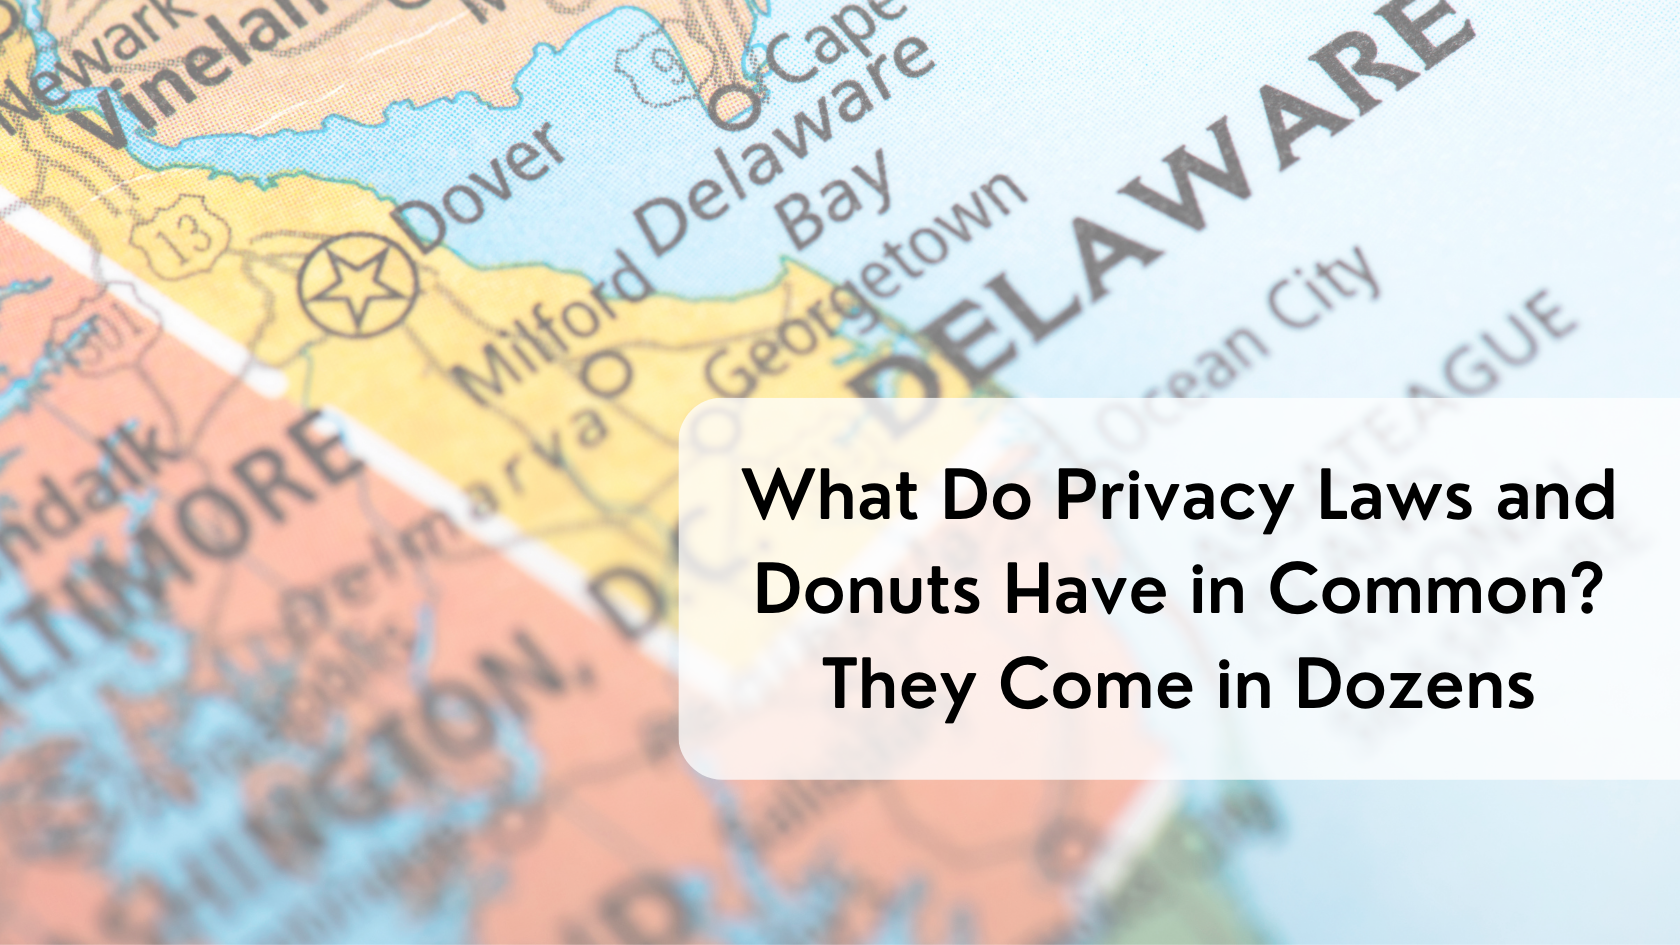 Delaware Passes 12th US Privacy Law